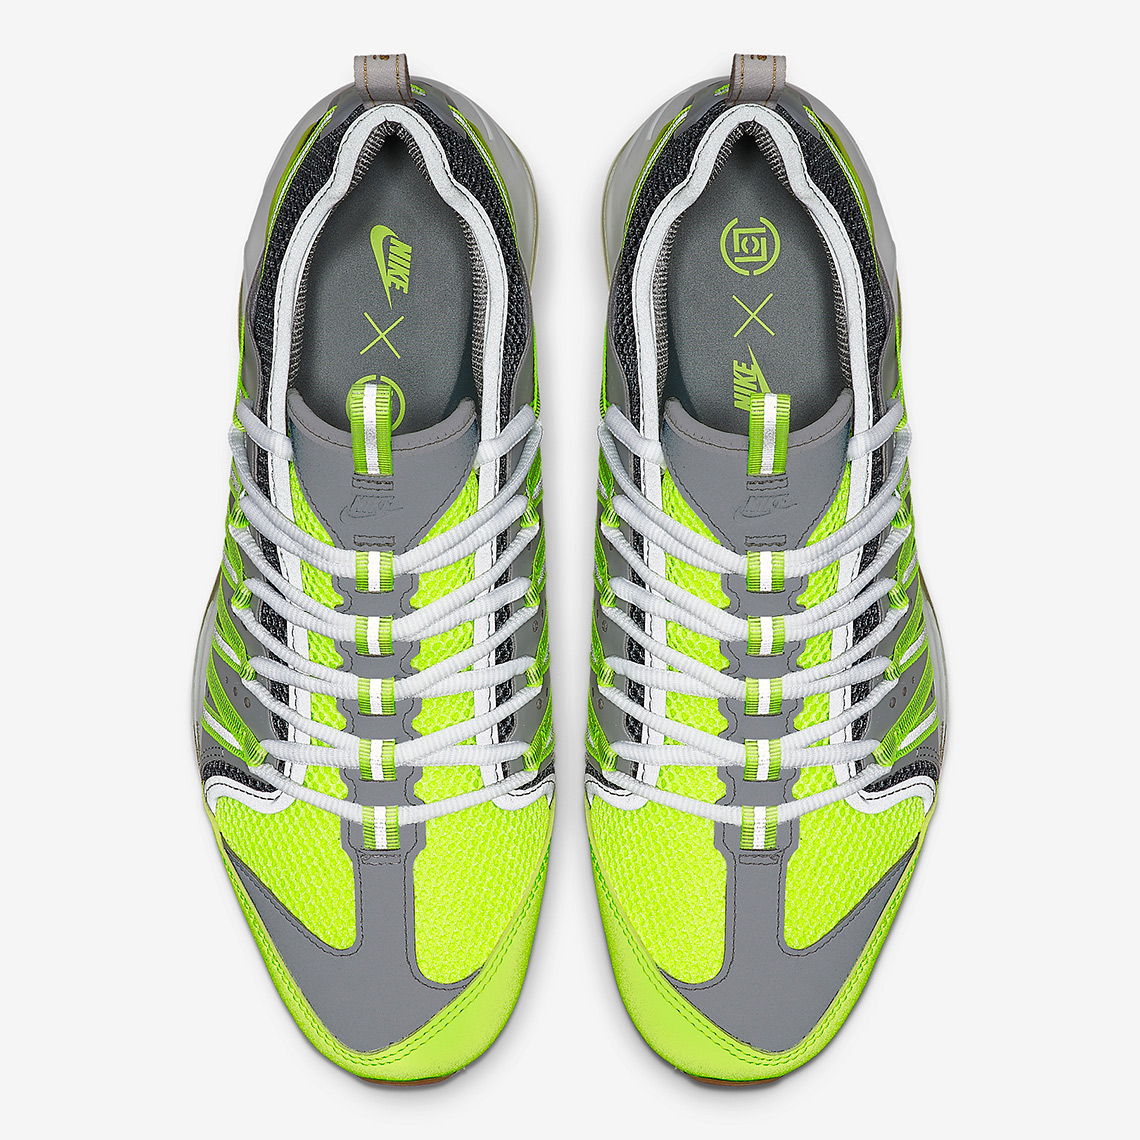 CLOT Nike Air Max 97 Haven - Full Release Info | SneakerNews.com